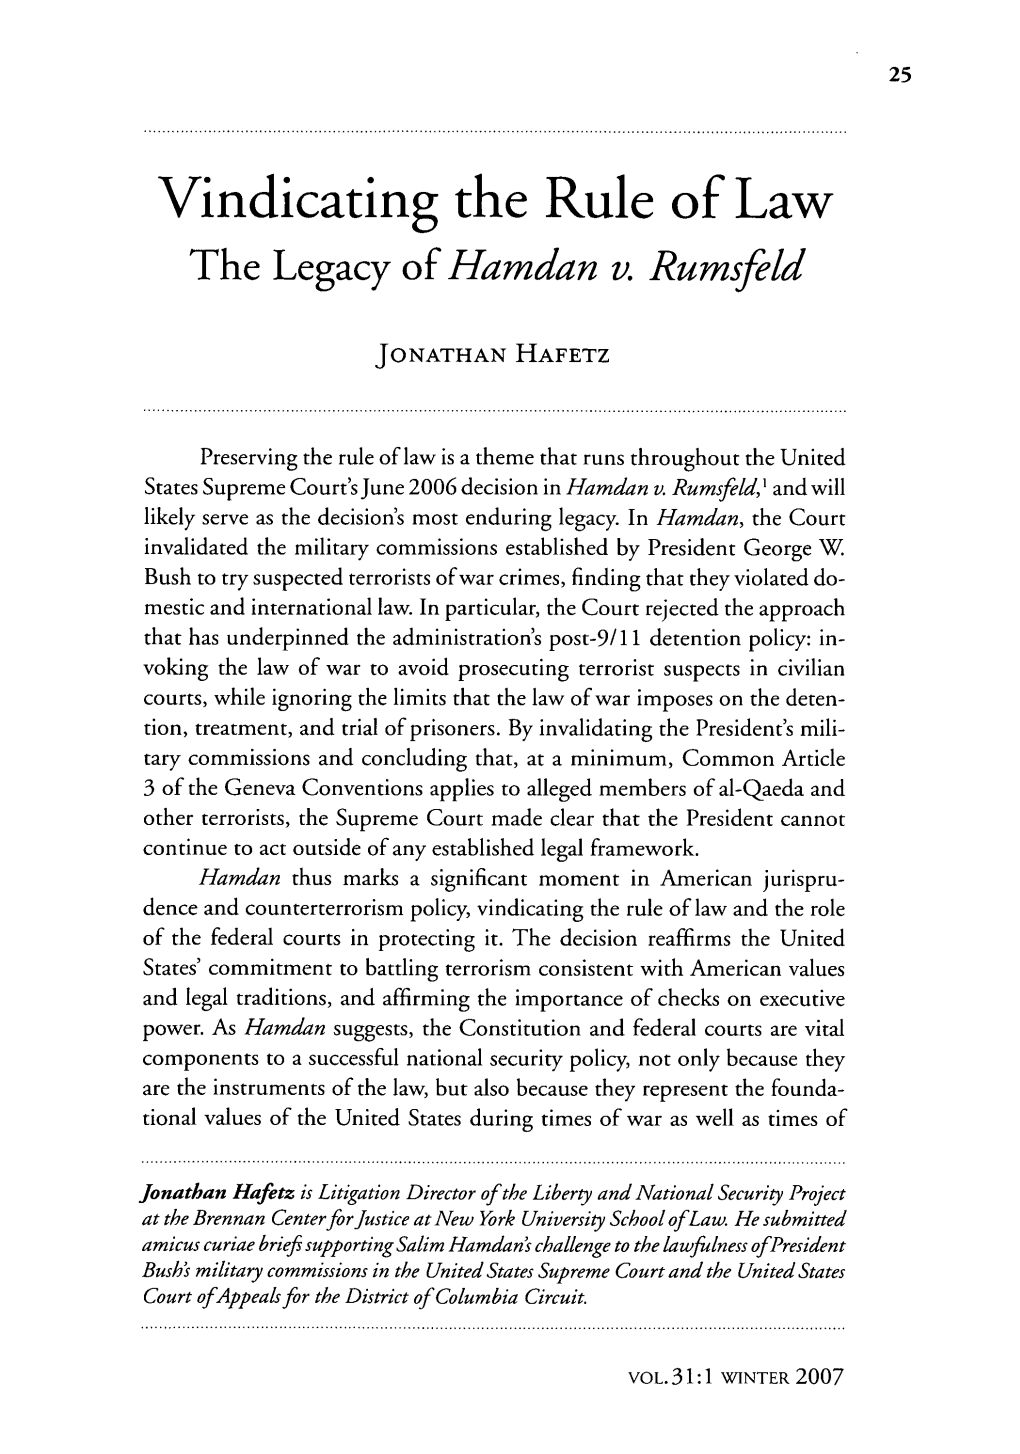 The Legacy of Hamdan V. Rumsfeld